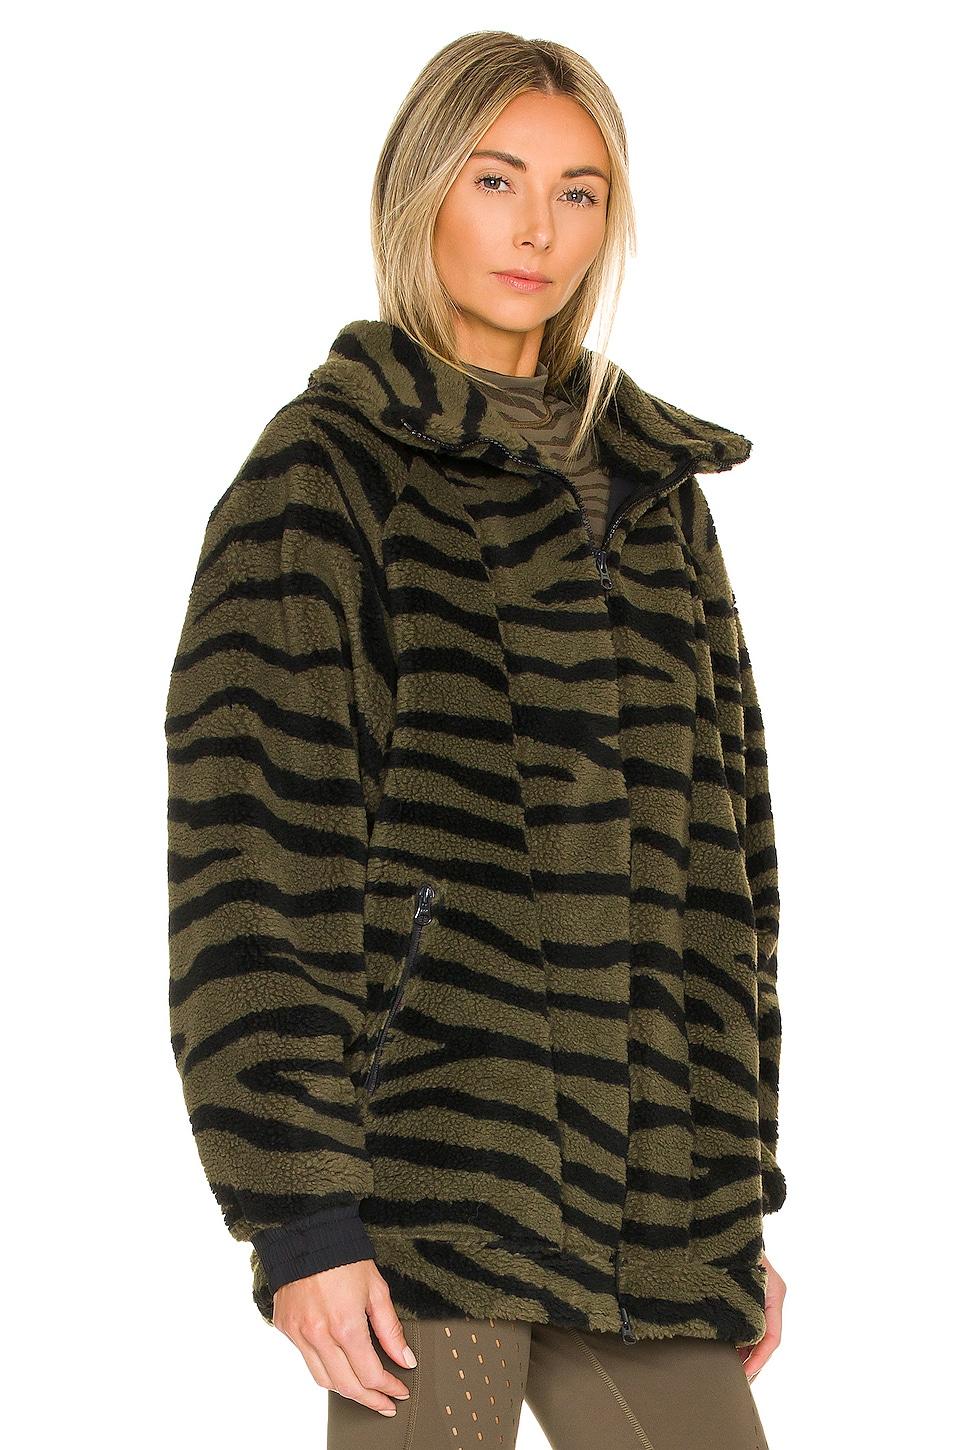 adidas By Stella McCartney Asmc Fz Fleece Jacket in Black | Lyst